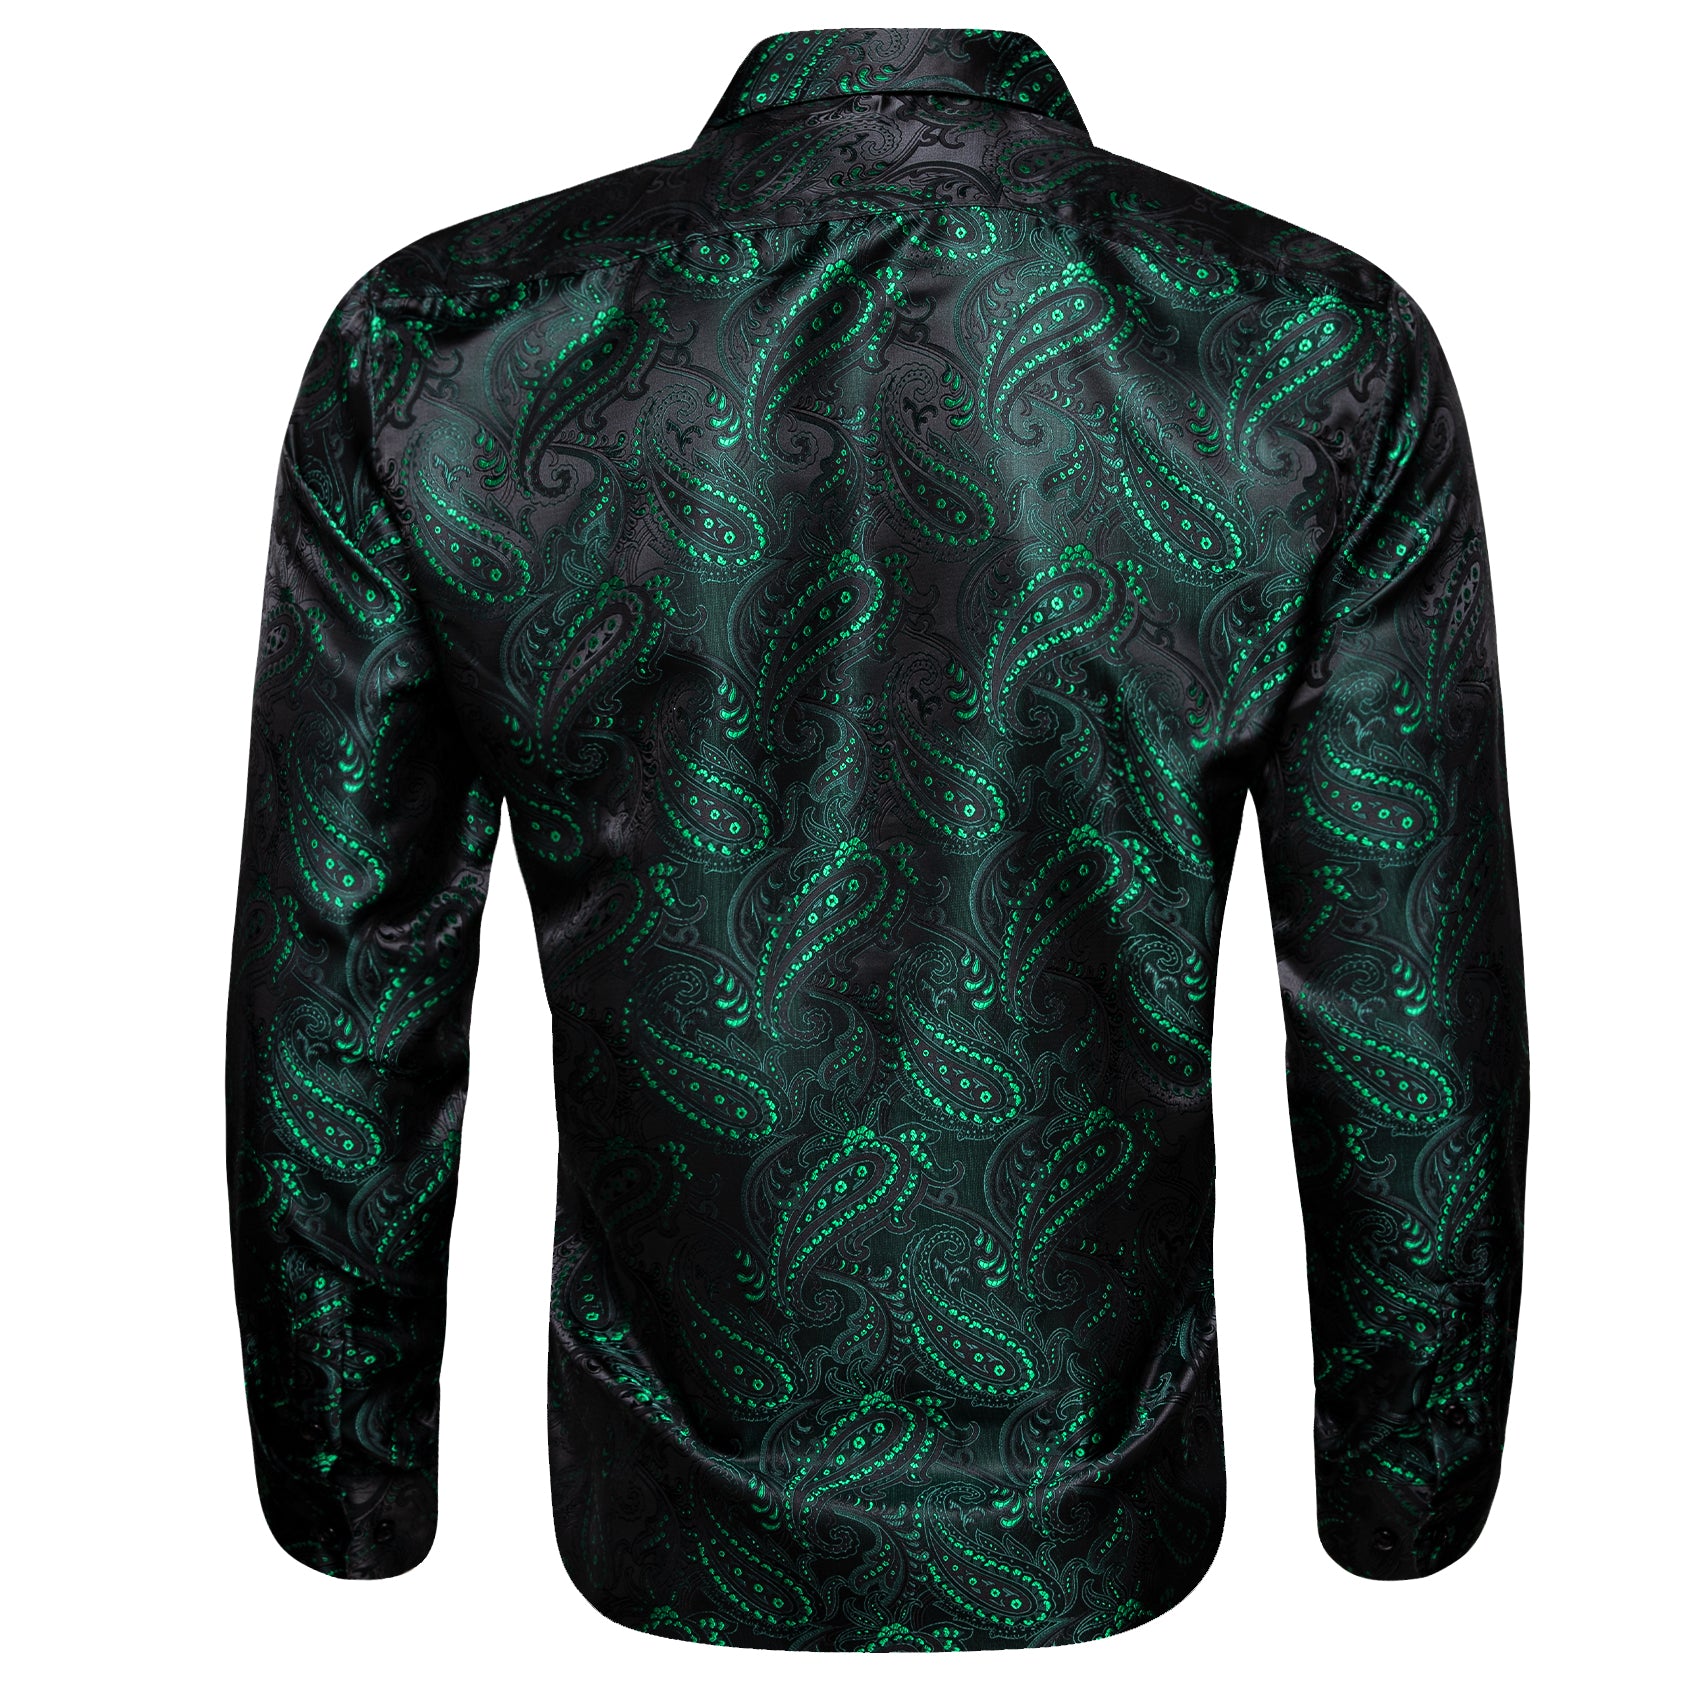 Barry.wang Fashion Green Black Paisley Silk Men's Shirt